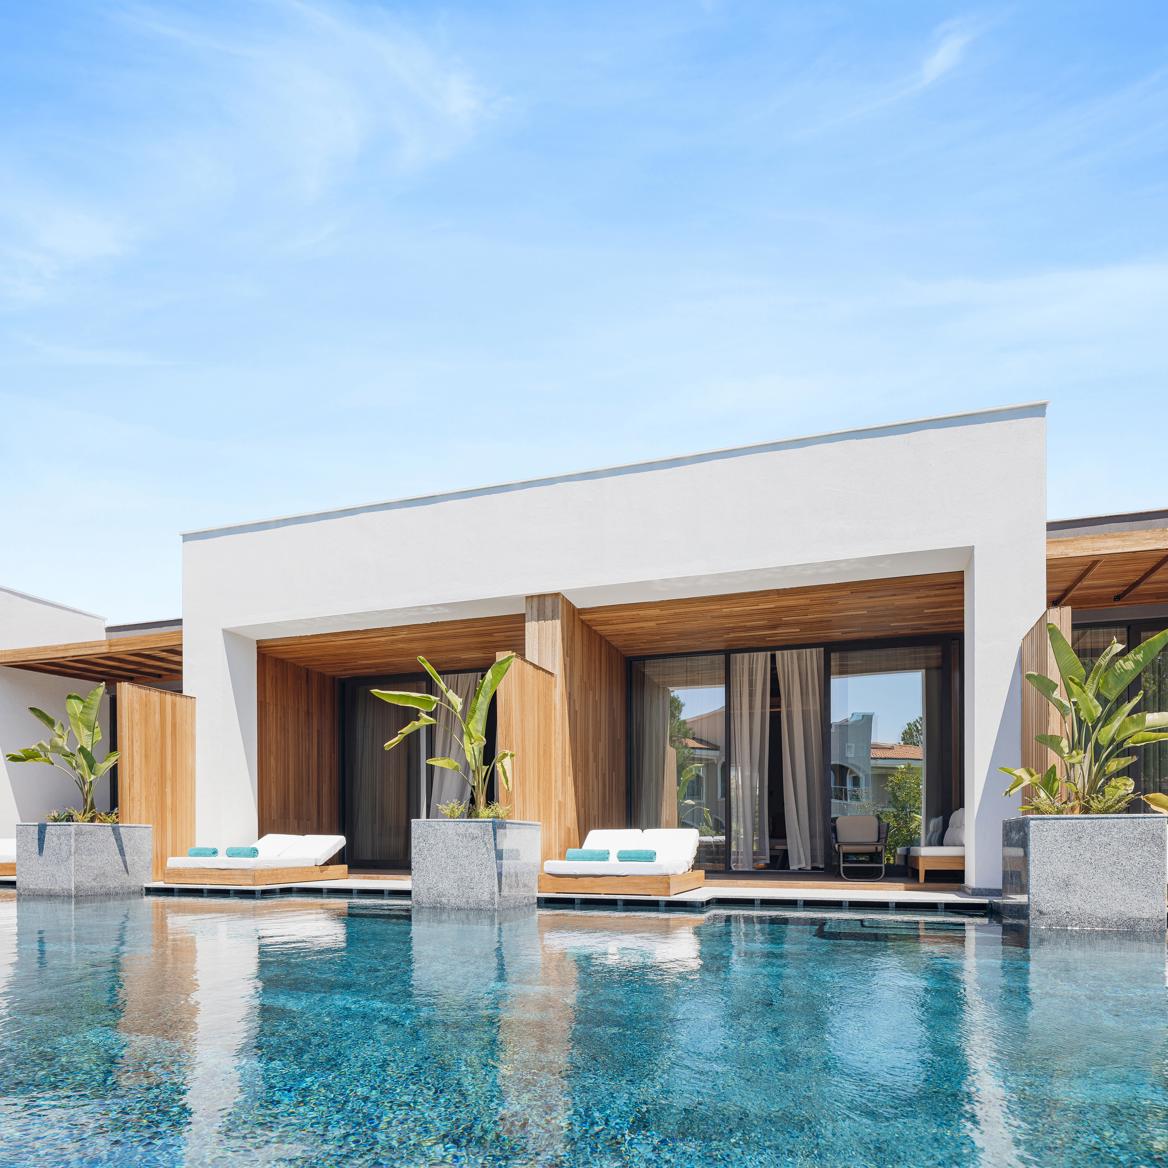 Sirene Belek Hotel Suites & Villas kantary beach hotel villas